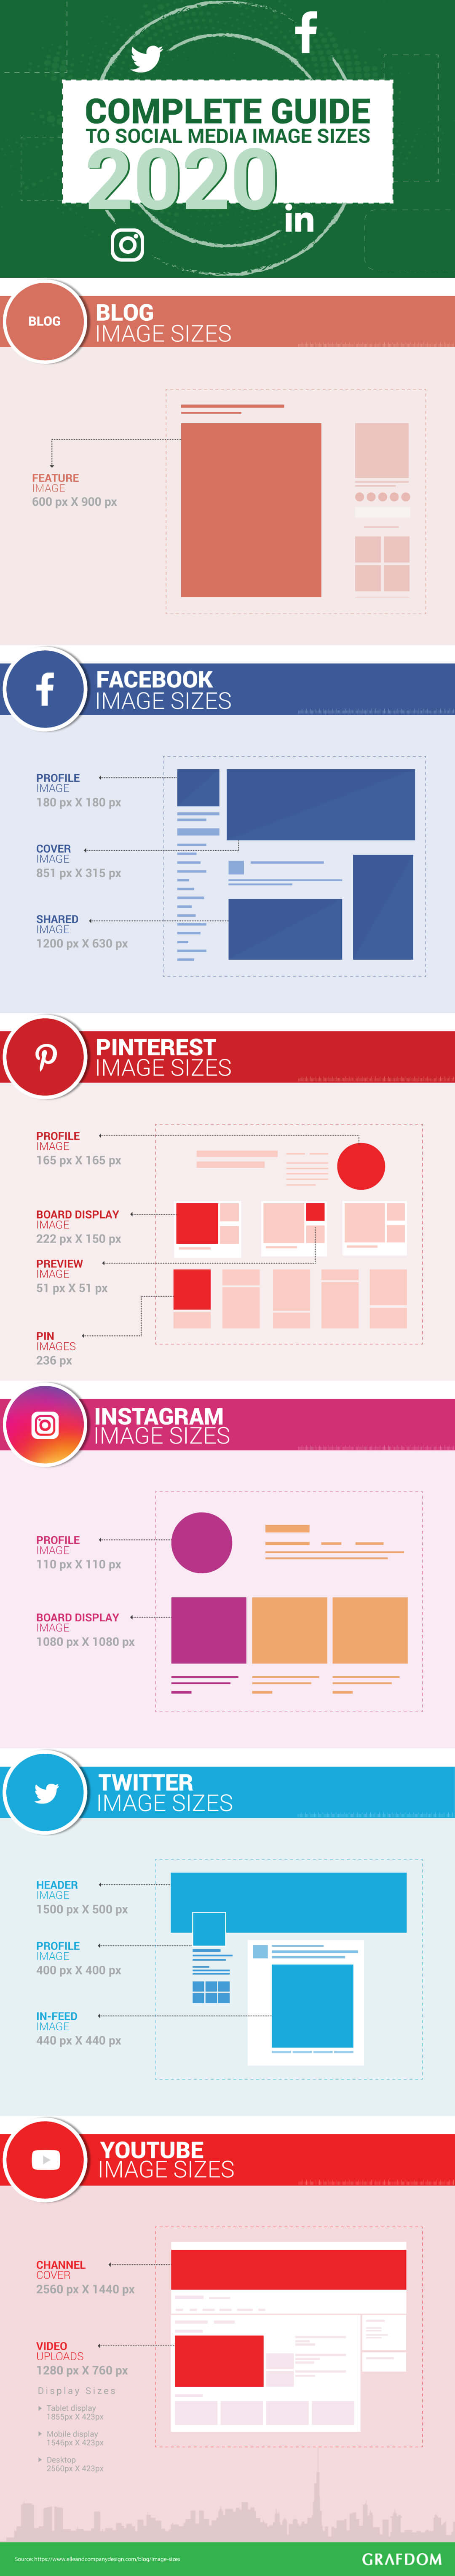 Social Media Image Sizes - 2020 Cheat Sheet